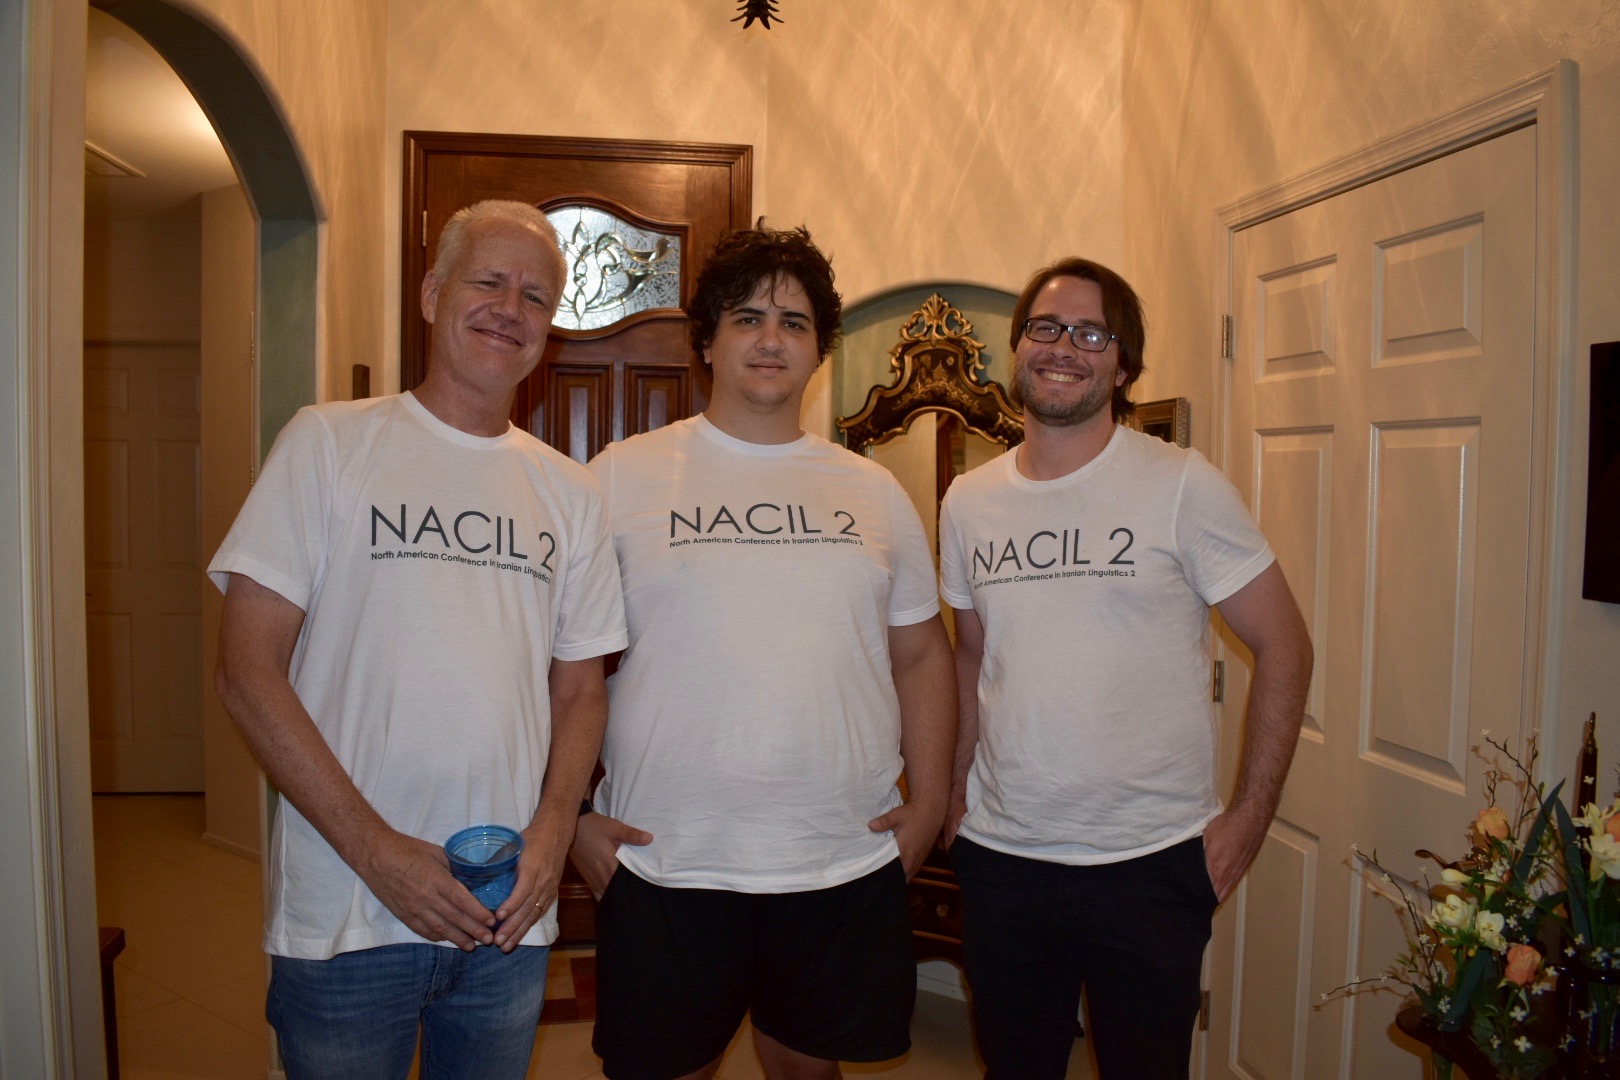 NACIL2 attendees